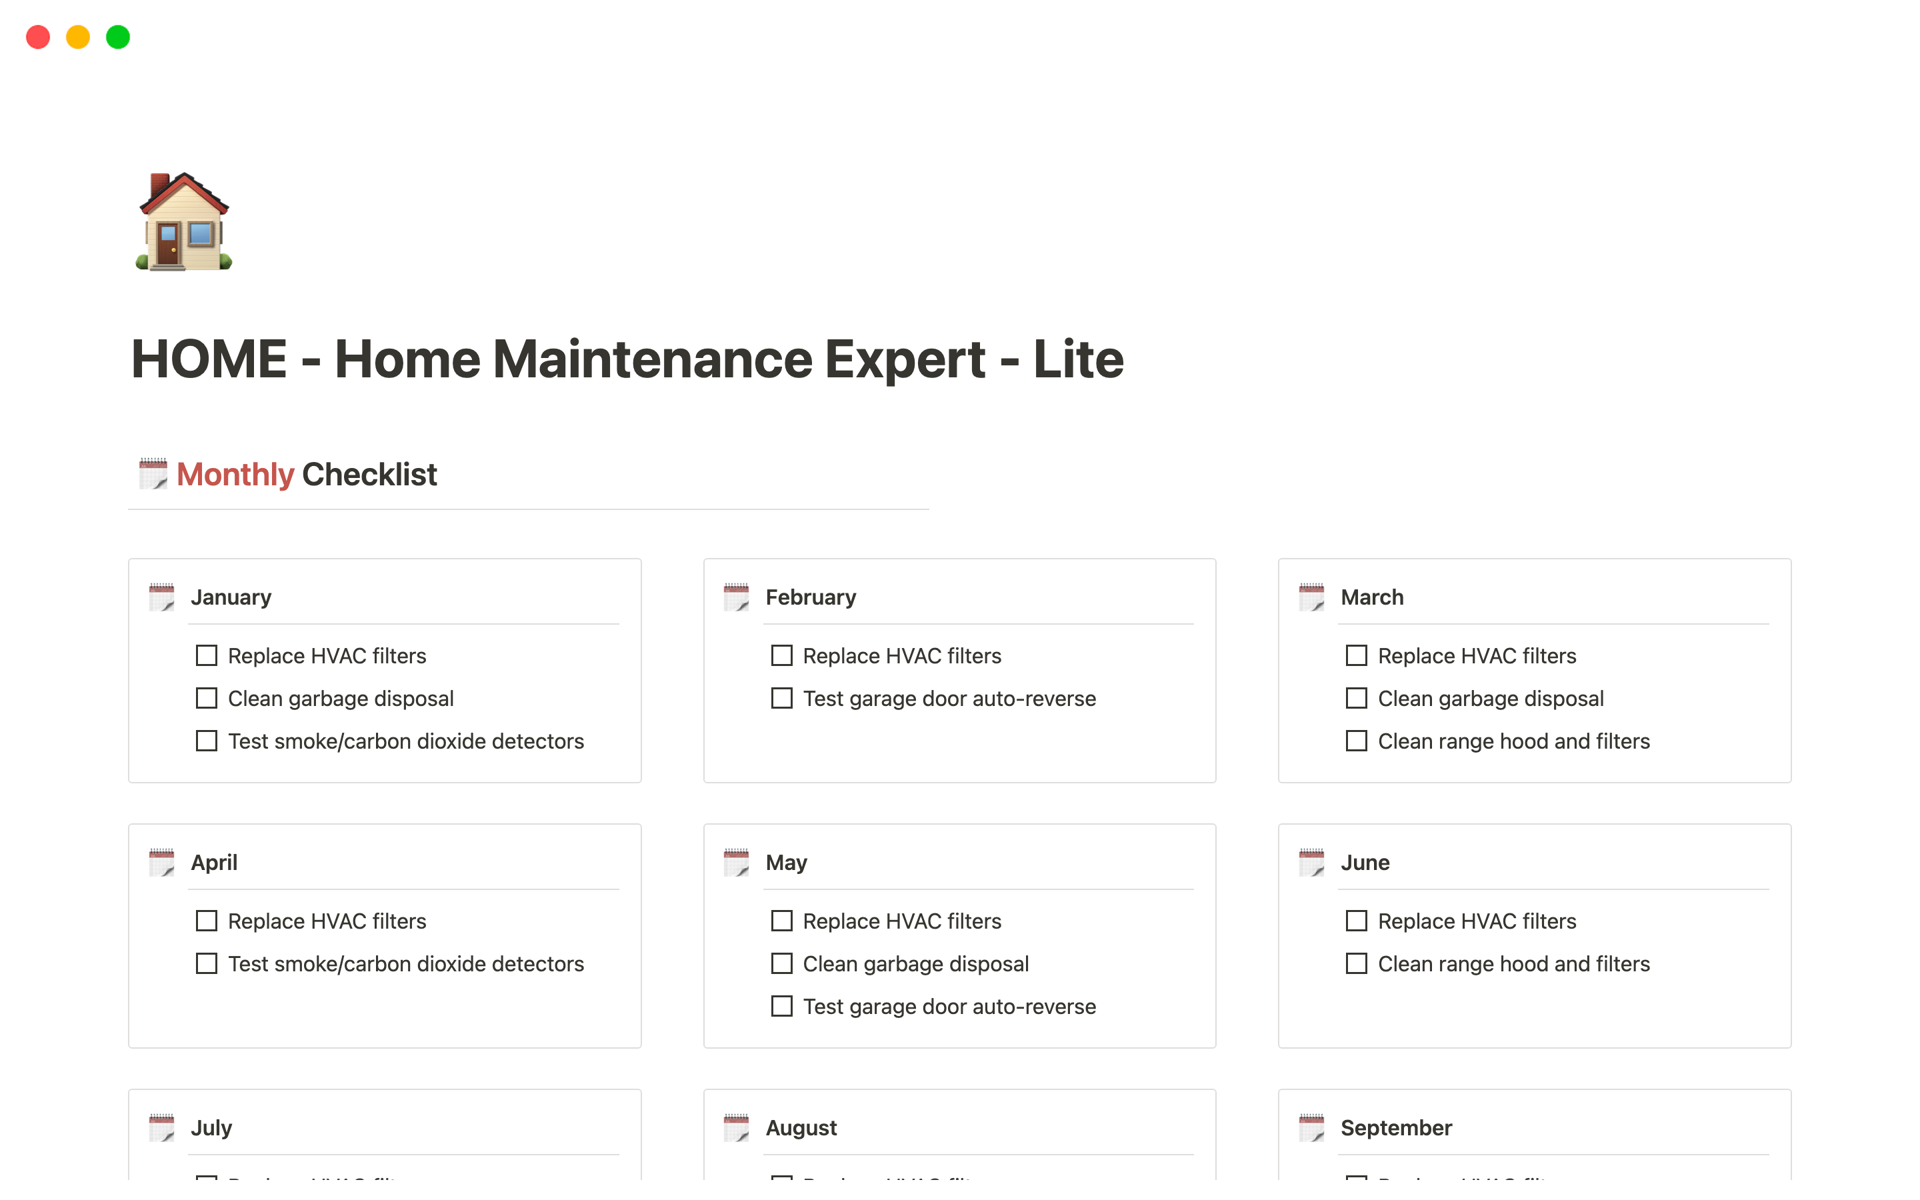 Vista previa de una plantilla para HOME - Home Maintenance Expert - Lite